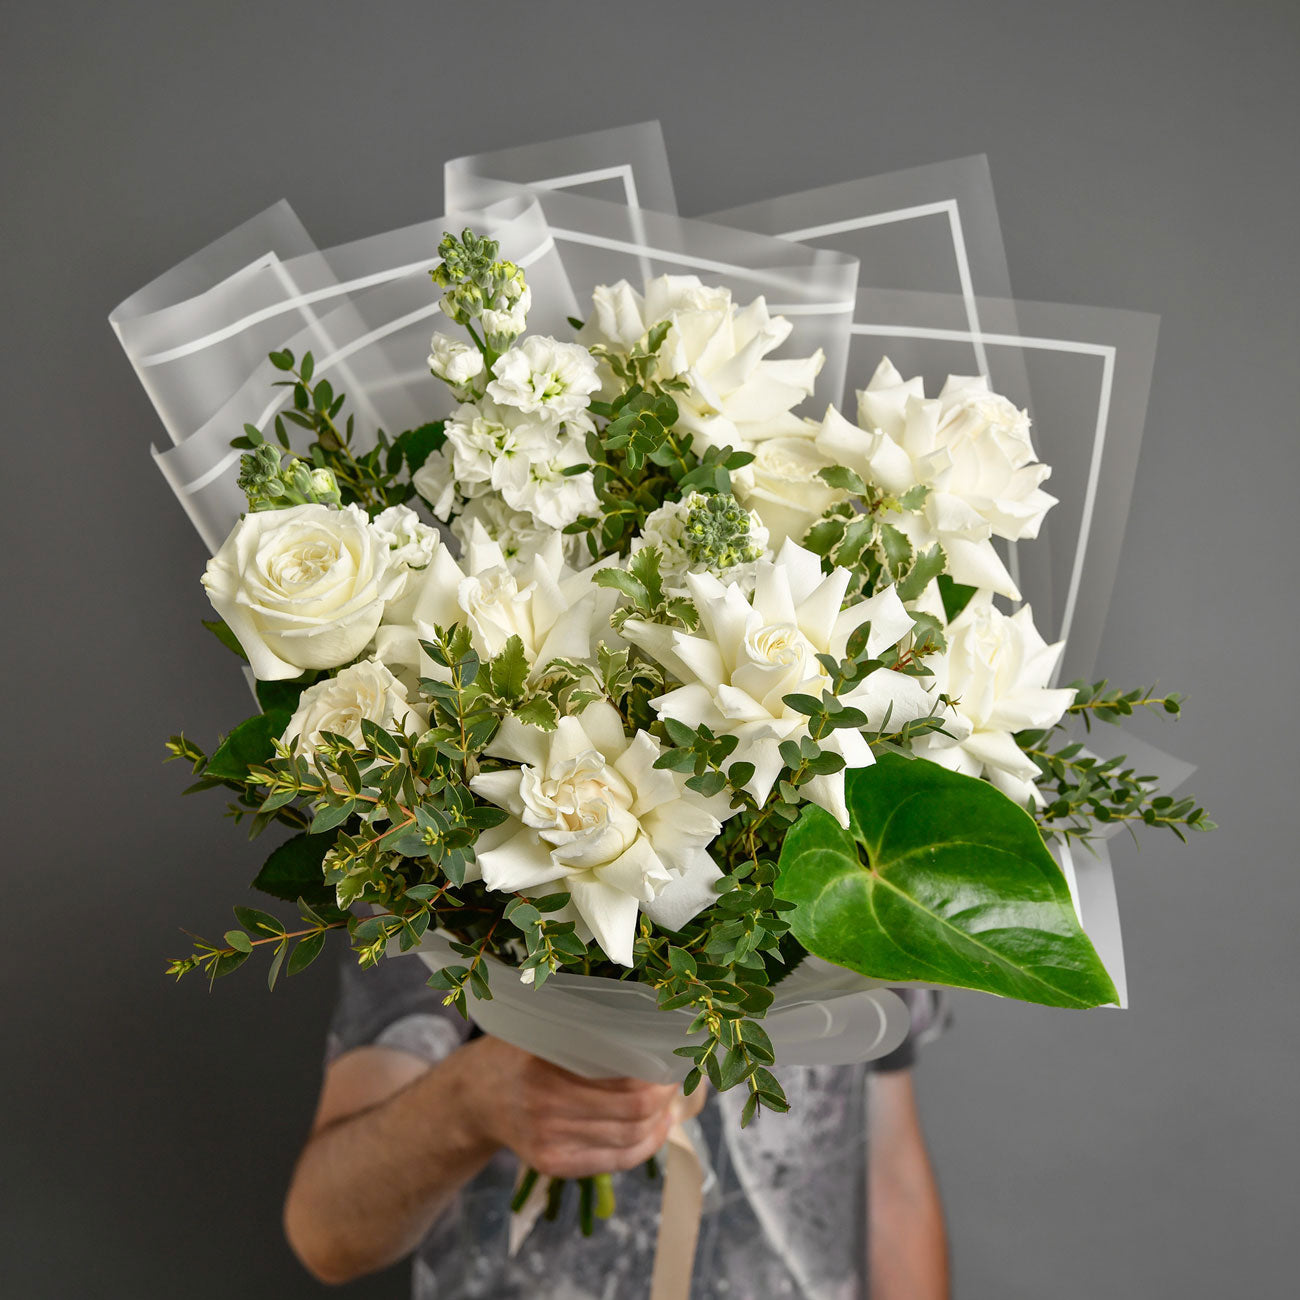 Buchet trandafiri speciali albi si antirrhinum, 2Buchet trandafiri speciali albi si antirrhinum, 2